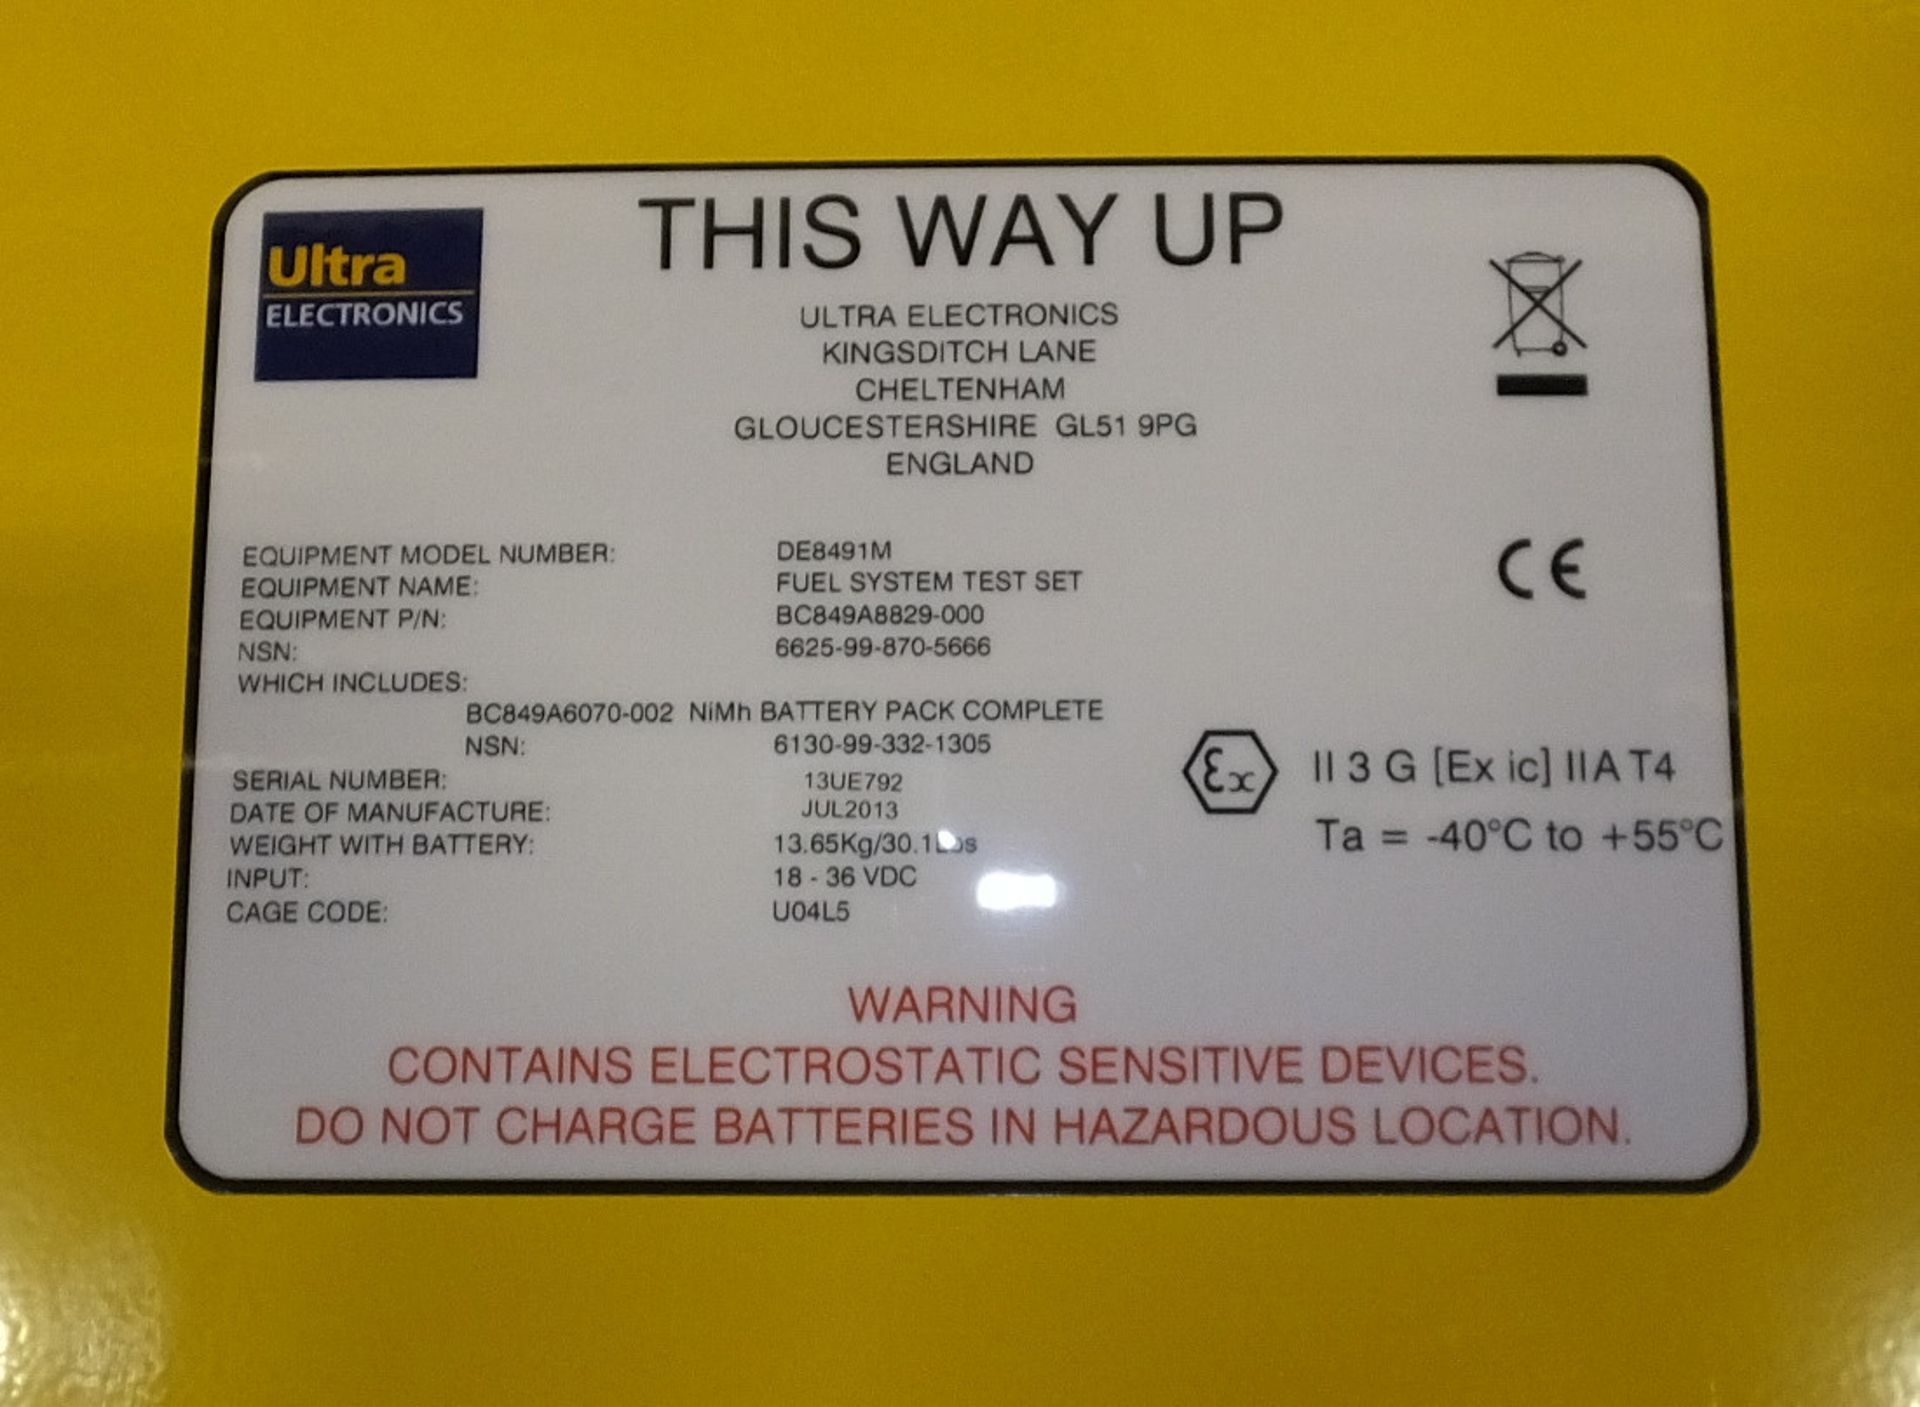 Ultra Electronics DE8491M Fuel System Test Set Kit in heavy duty carry case - Image 2 of 5